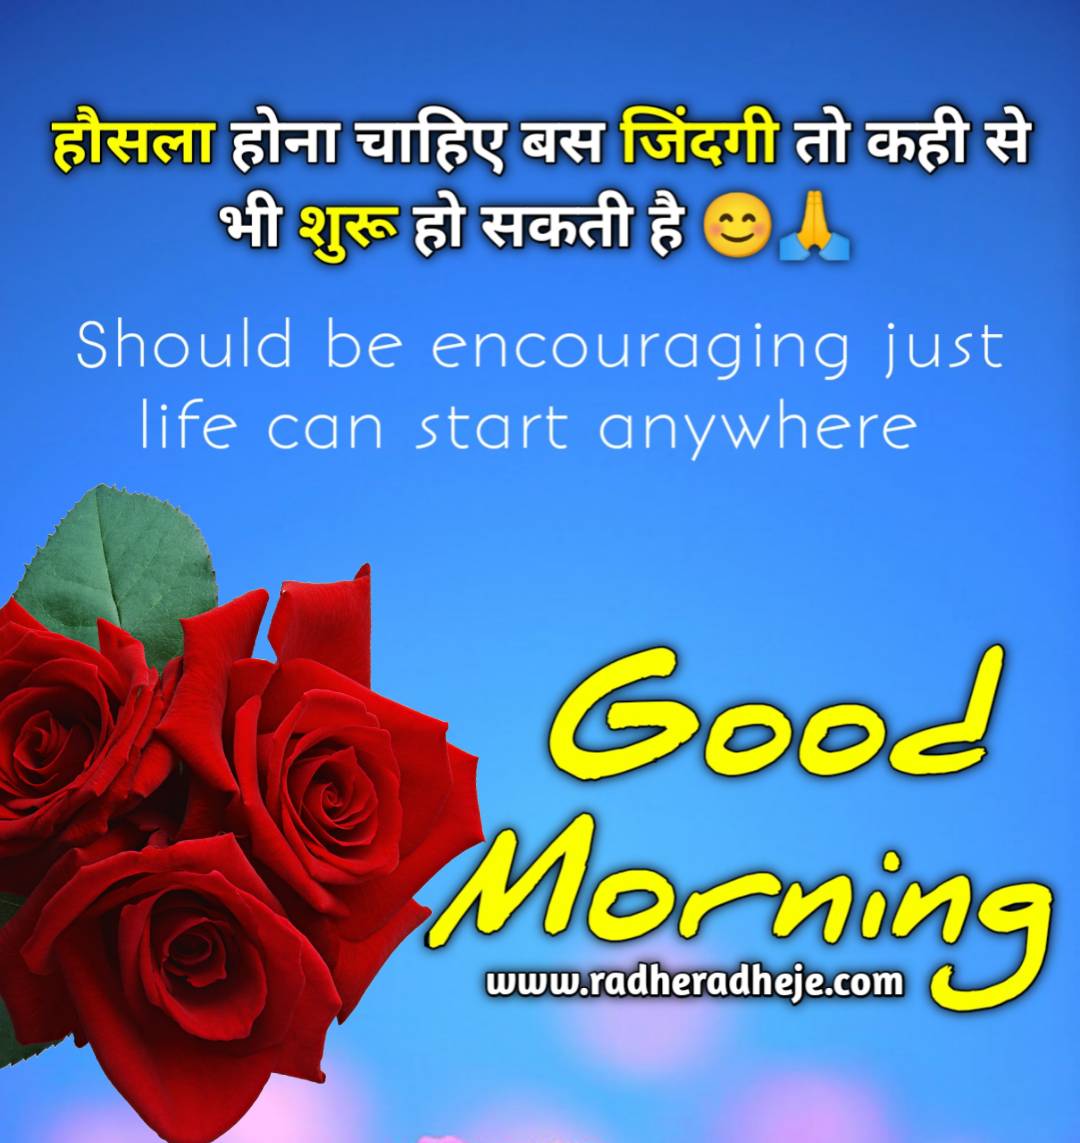 Good morning Quotes in Hindi & Inspirational thought - RadheRadheje